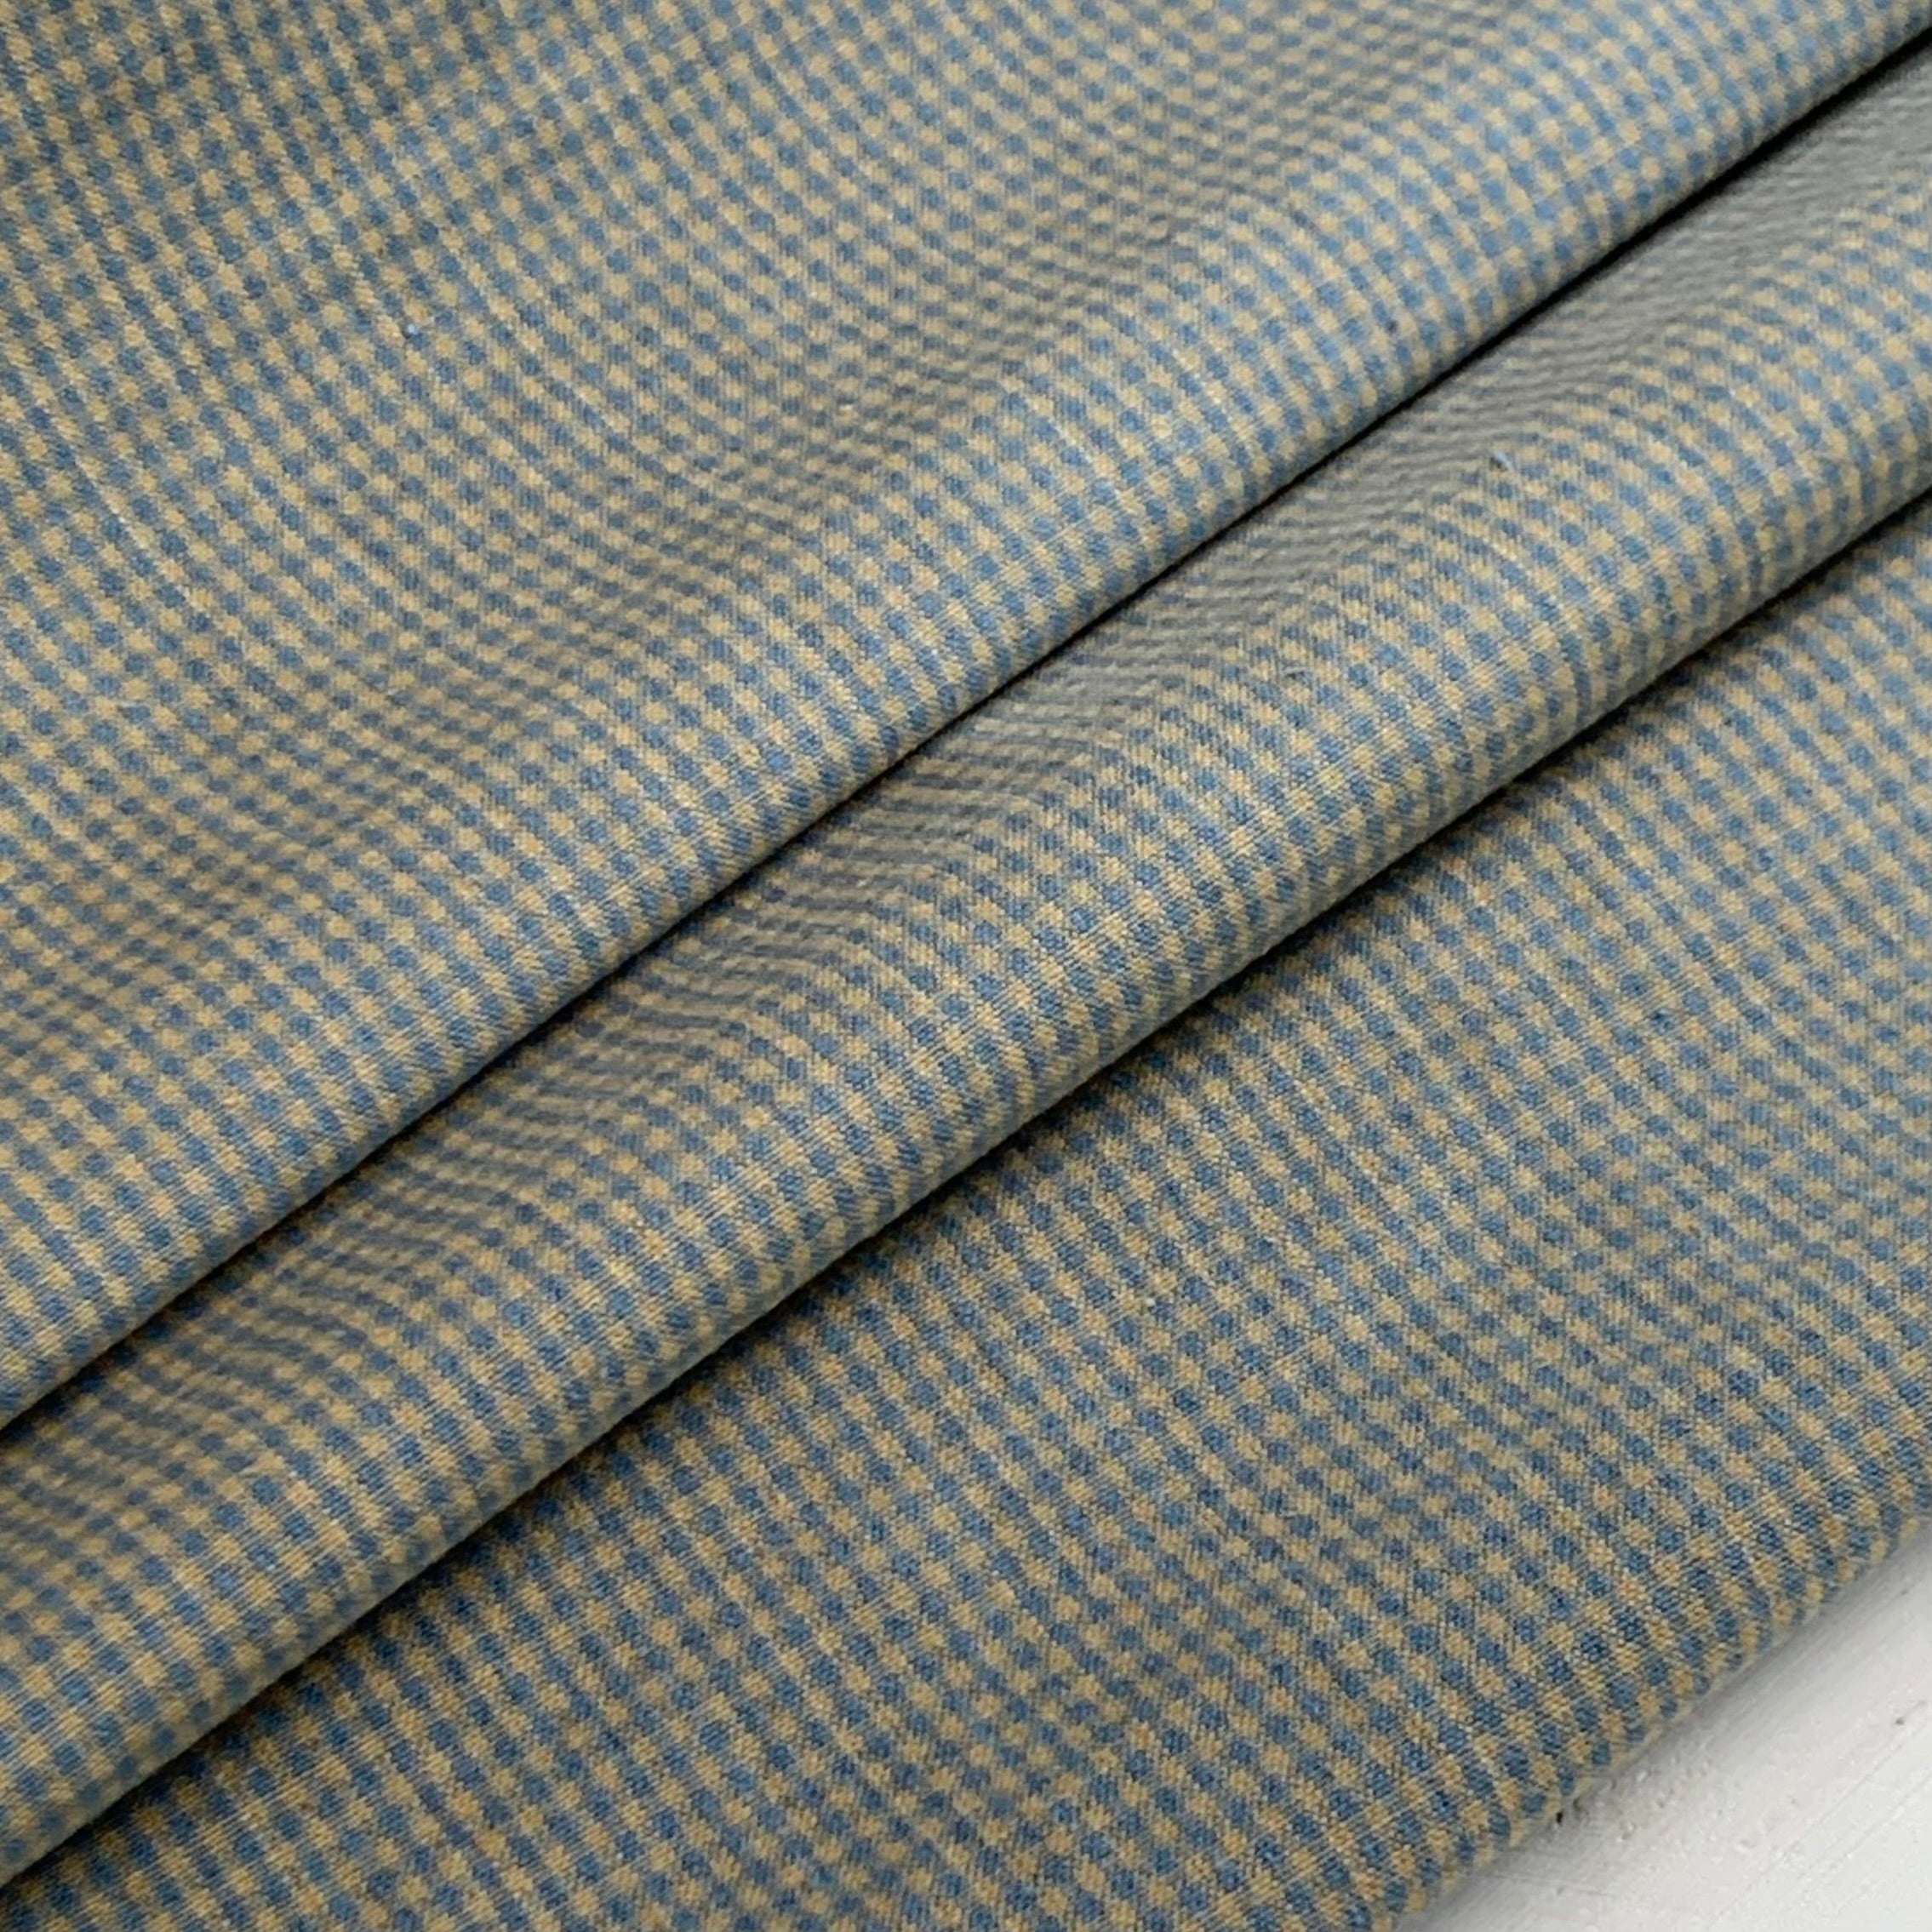 Slate Blue and Beige Mini Check Plaid - Homespun Fabric